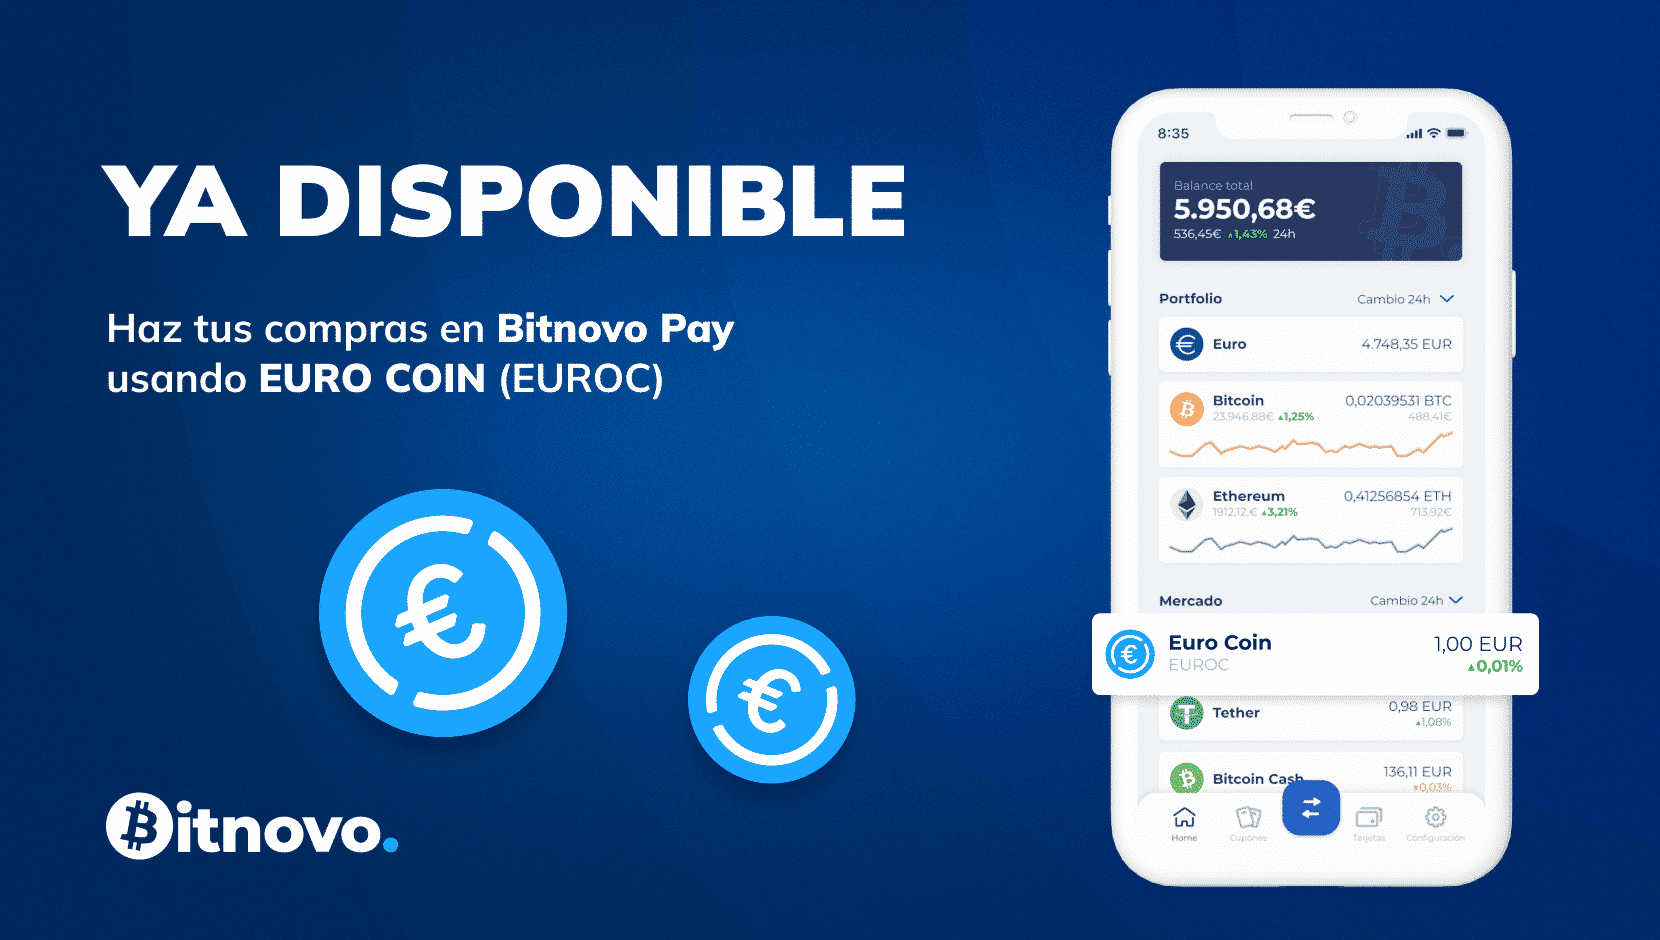 Eurocoin (EUROC) maintenant disponible sur Bitnovo